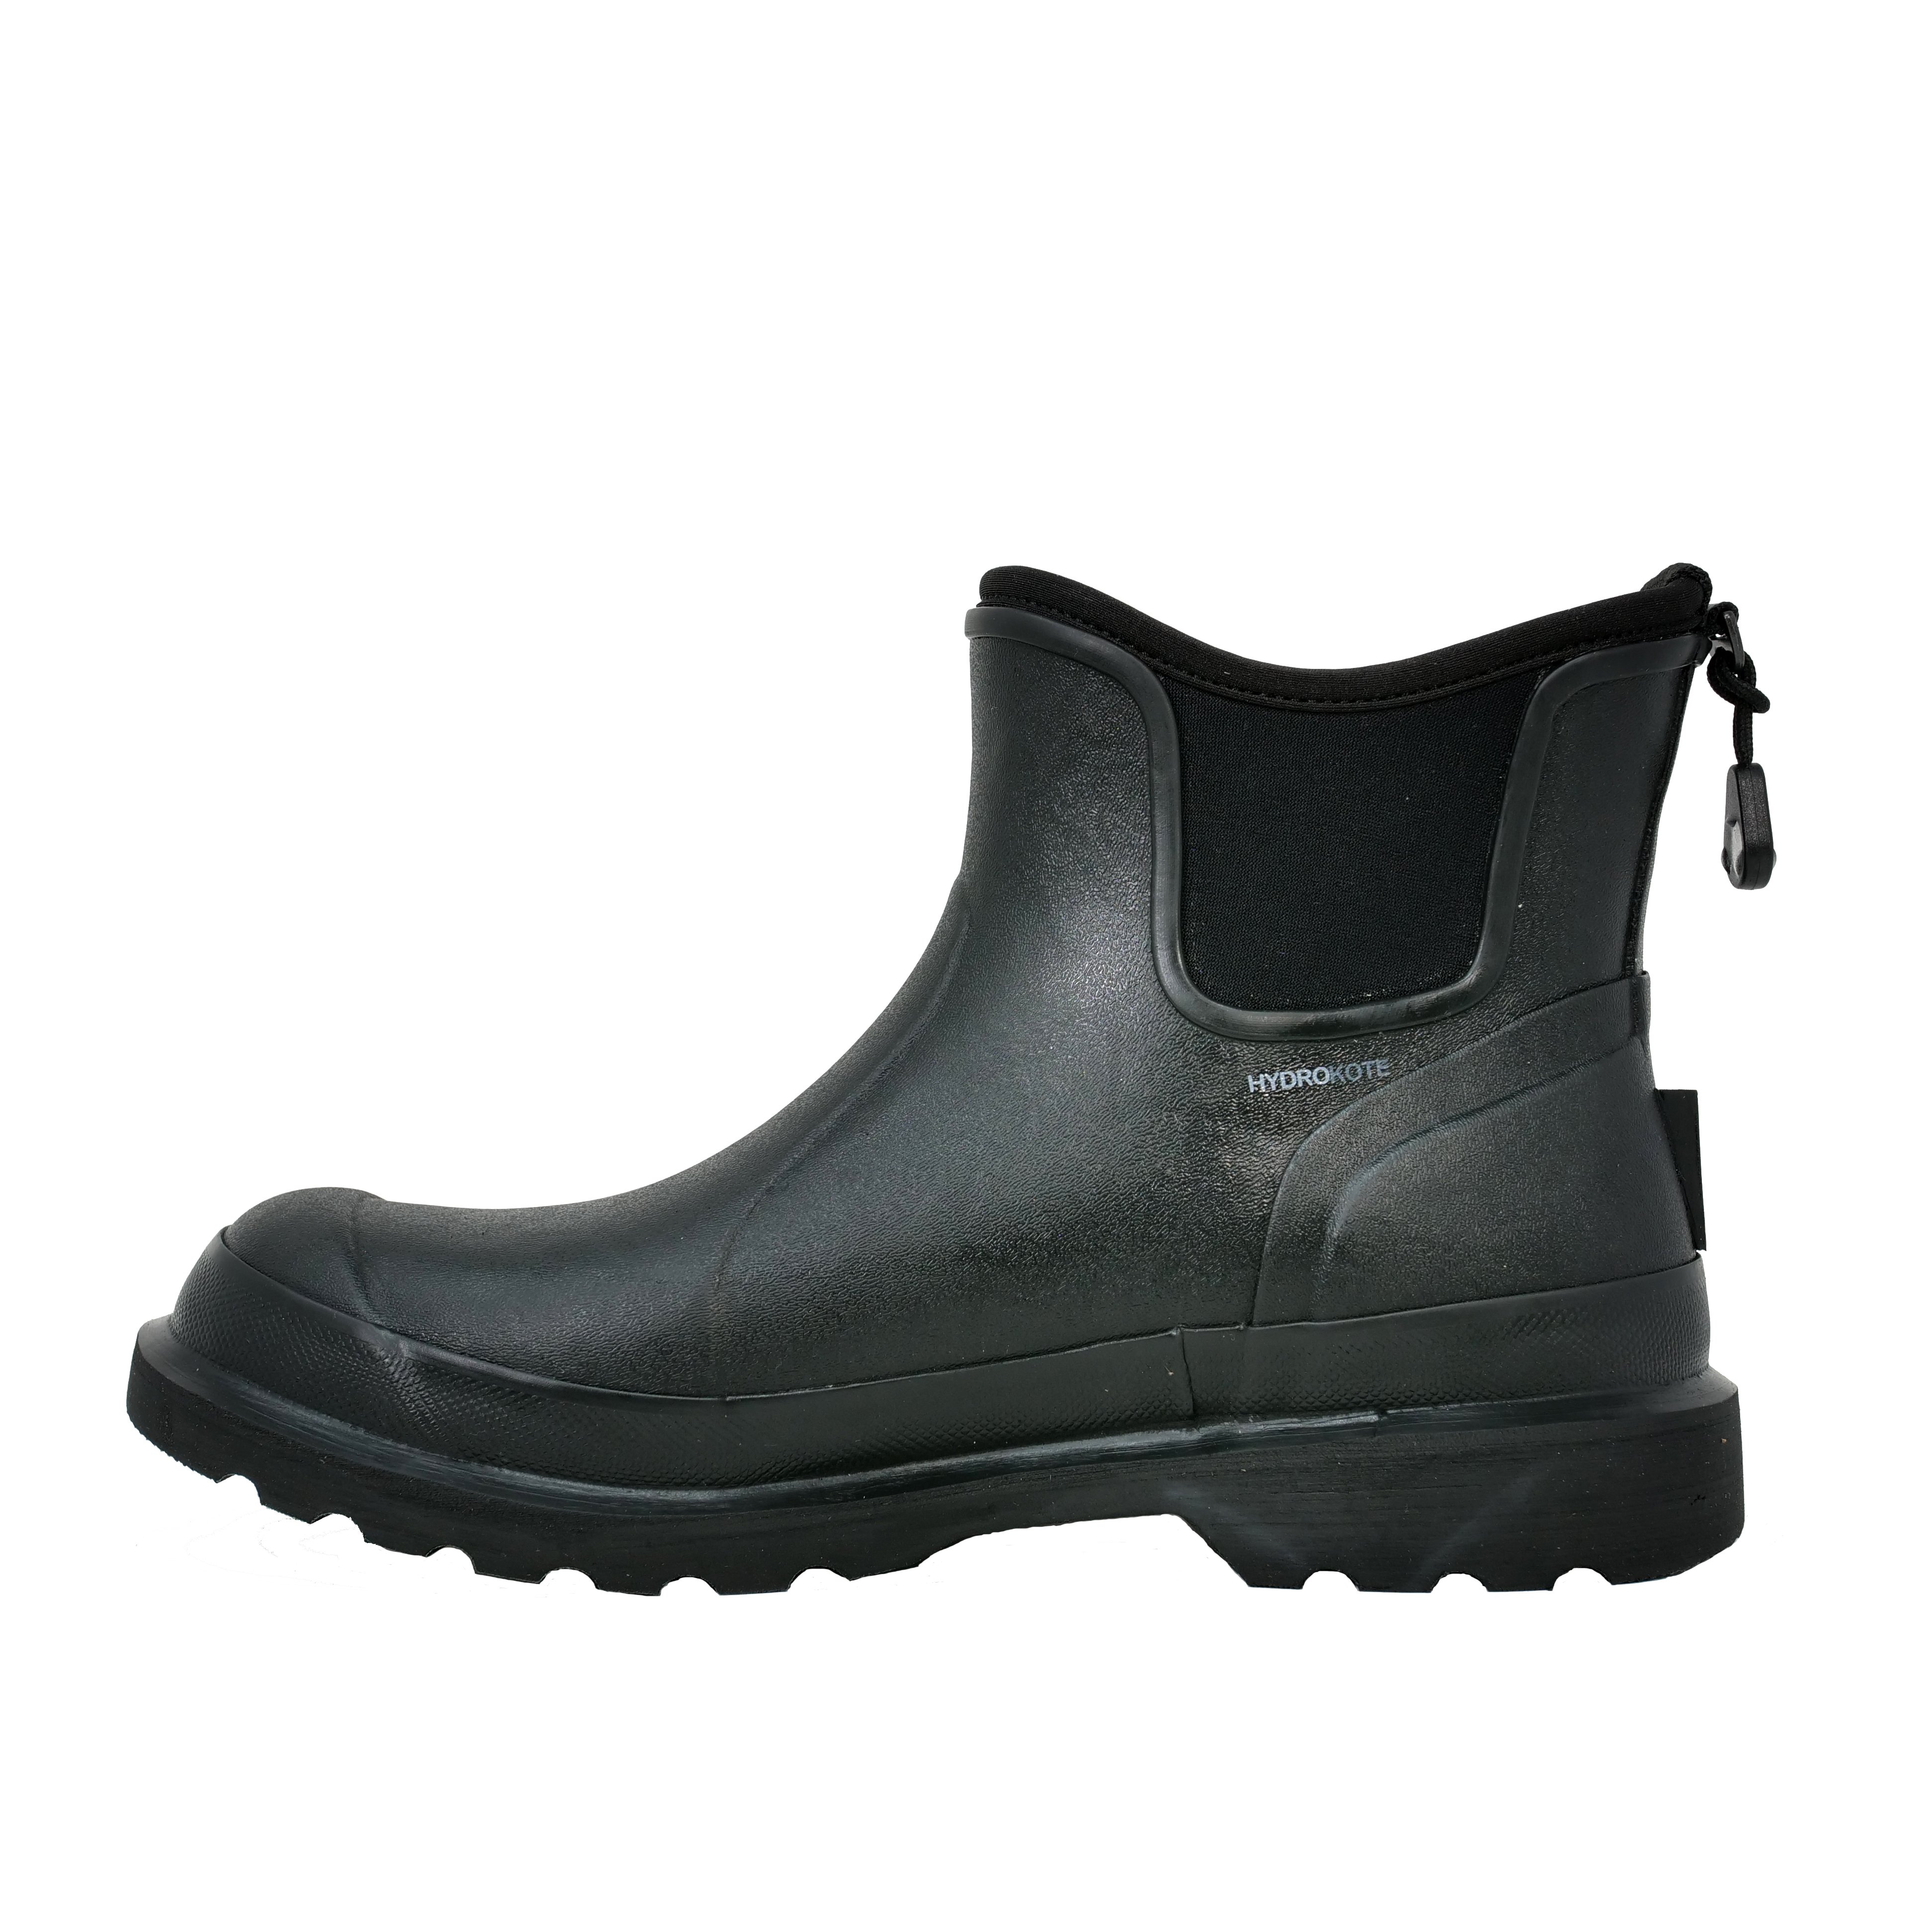 Sod Buster Black – Dryshod Waterproof Boots